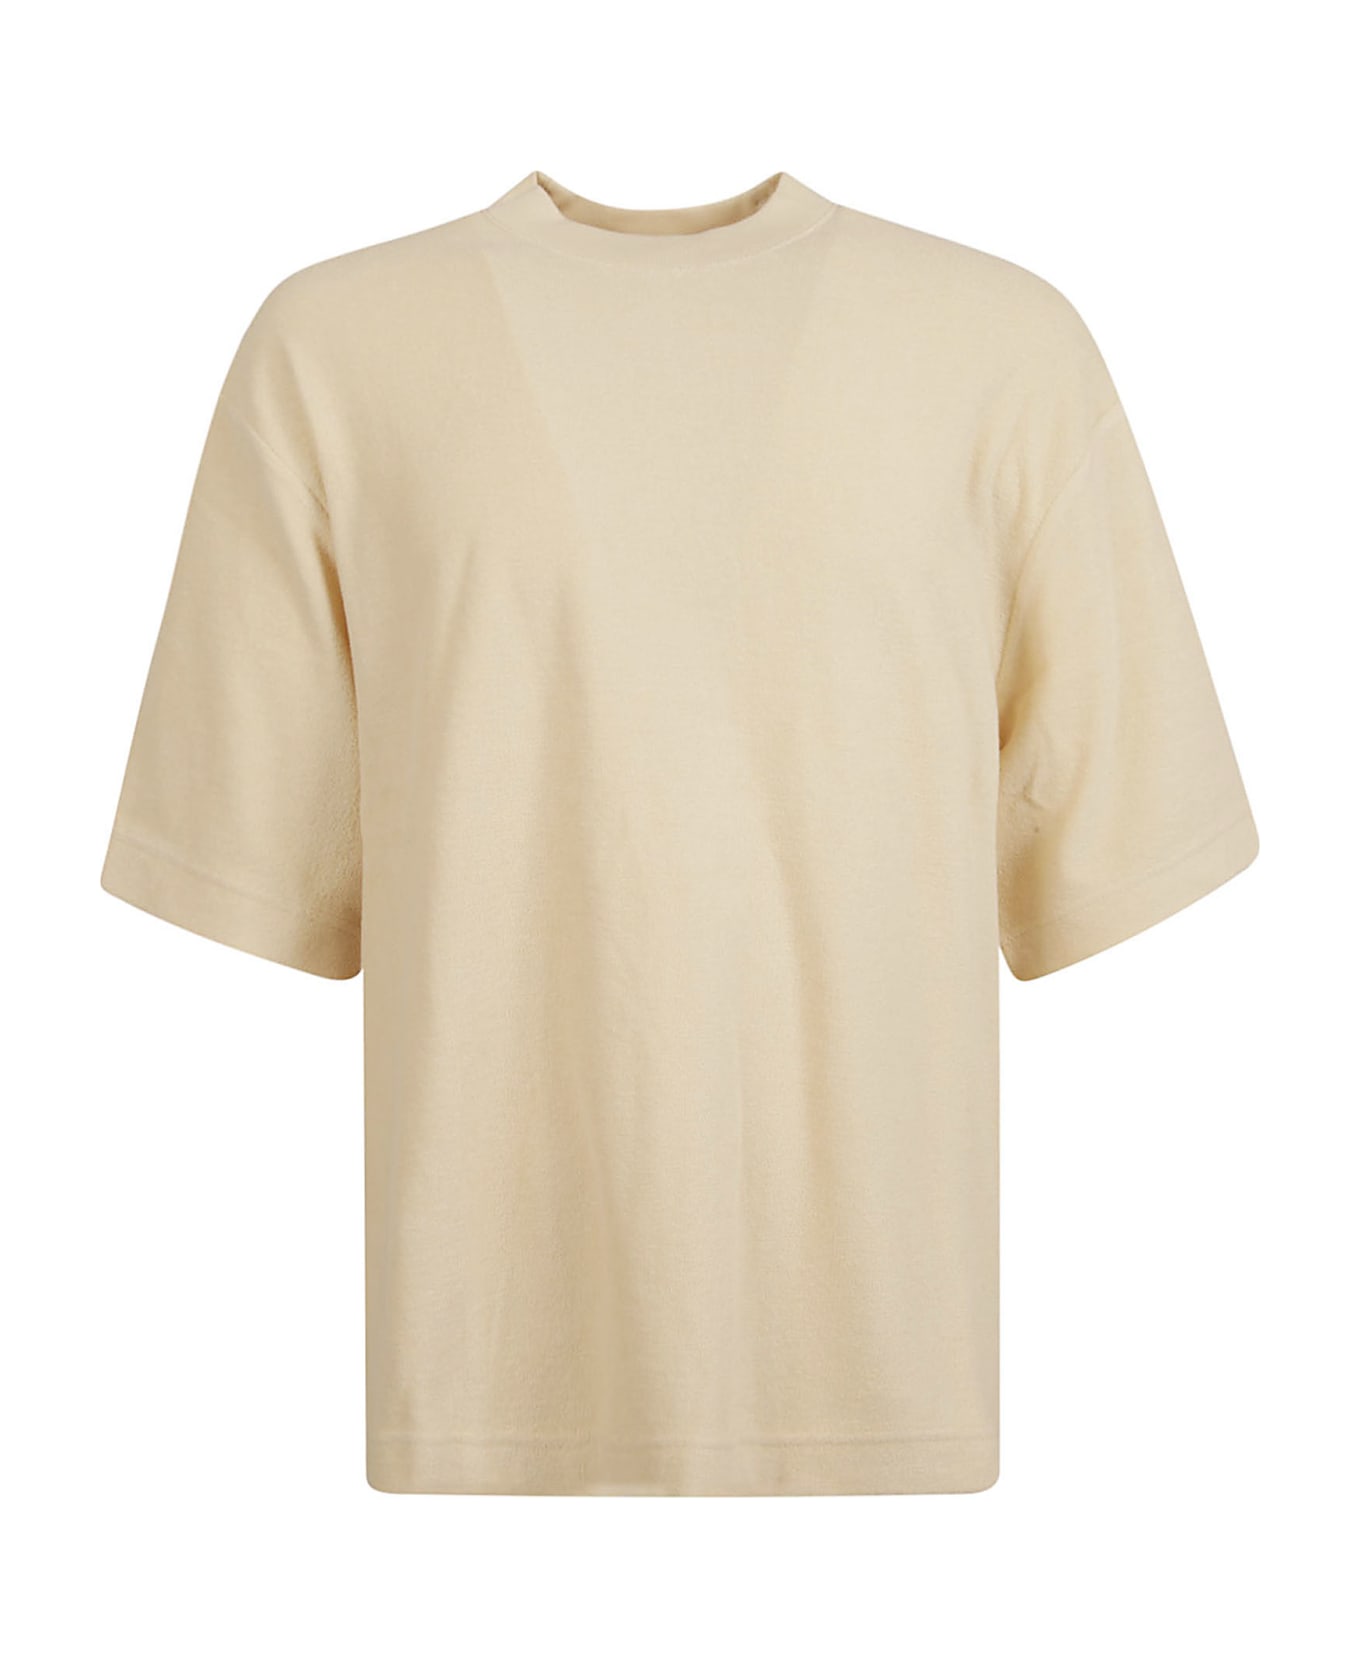 Burberry Round Neck Classic T-shirt - Calico シャツ